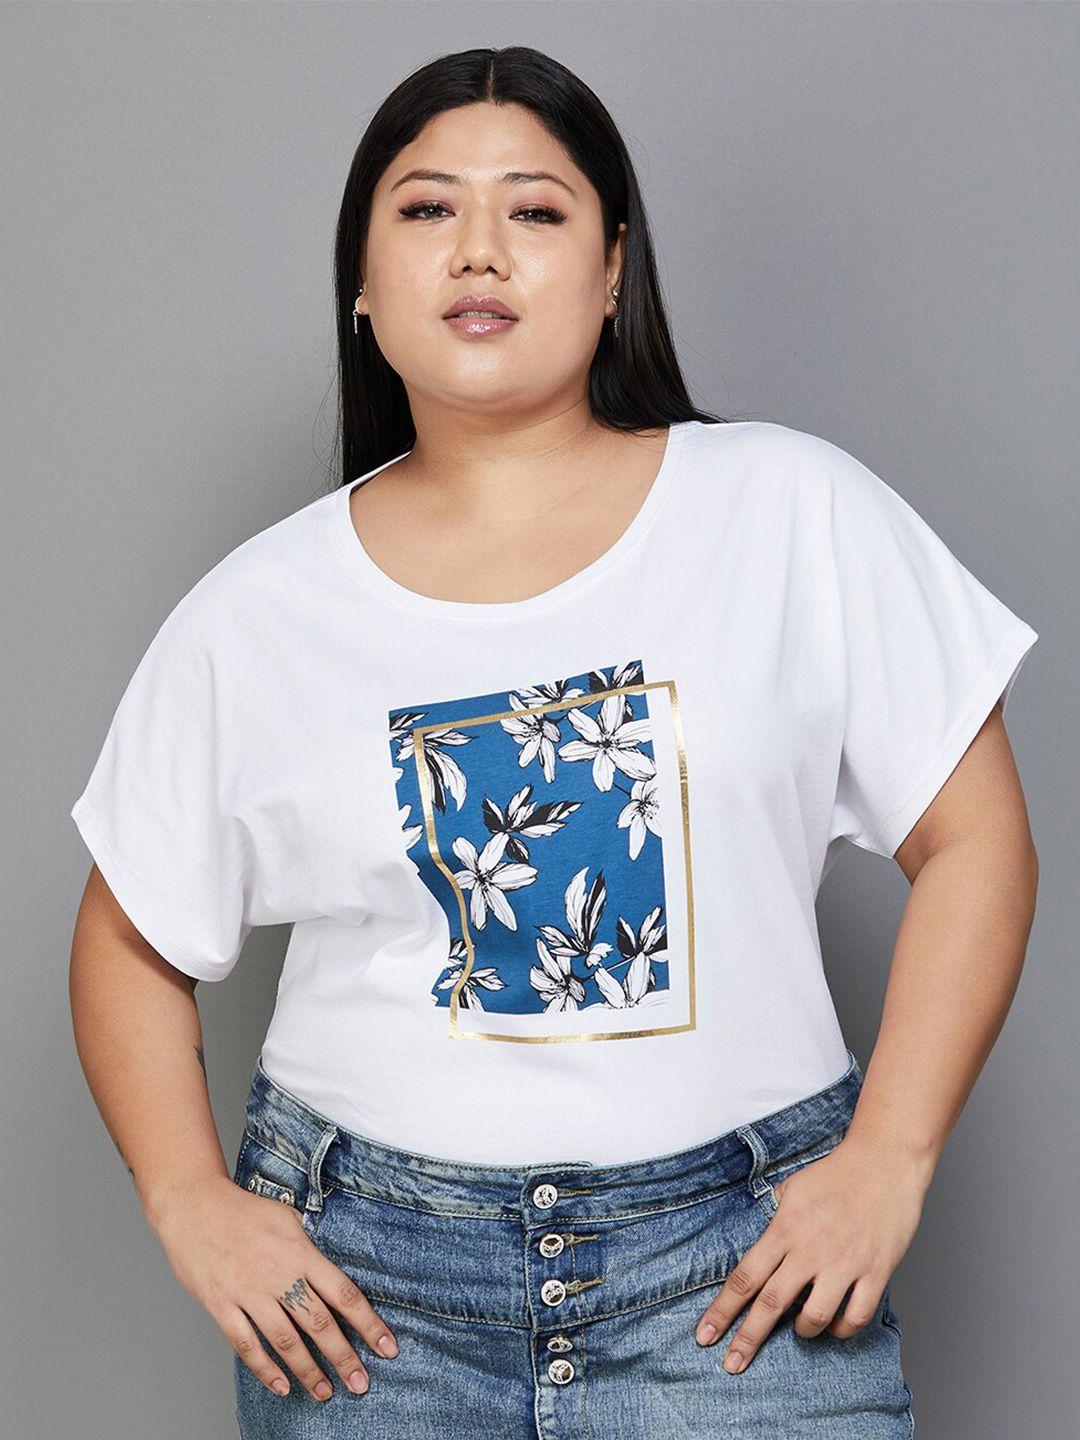 nexus by lifestyle plus size floral printed round neck cotton t-shirt